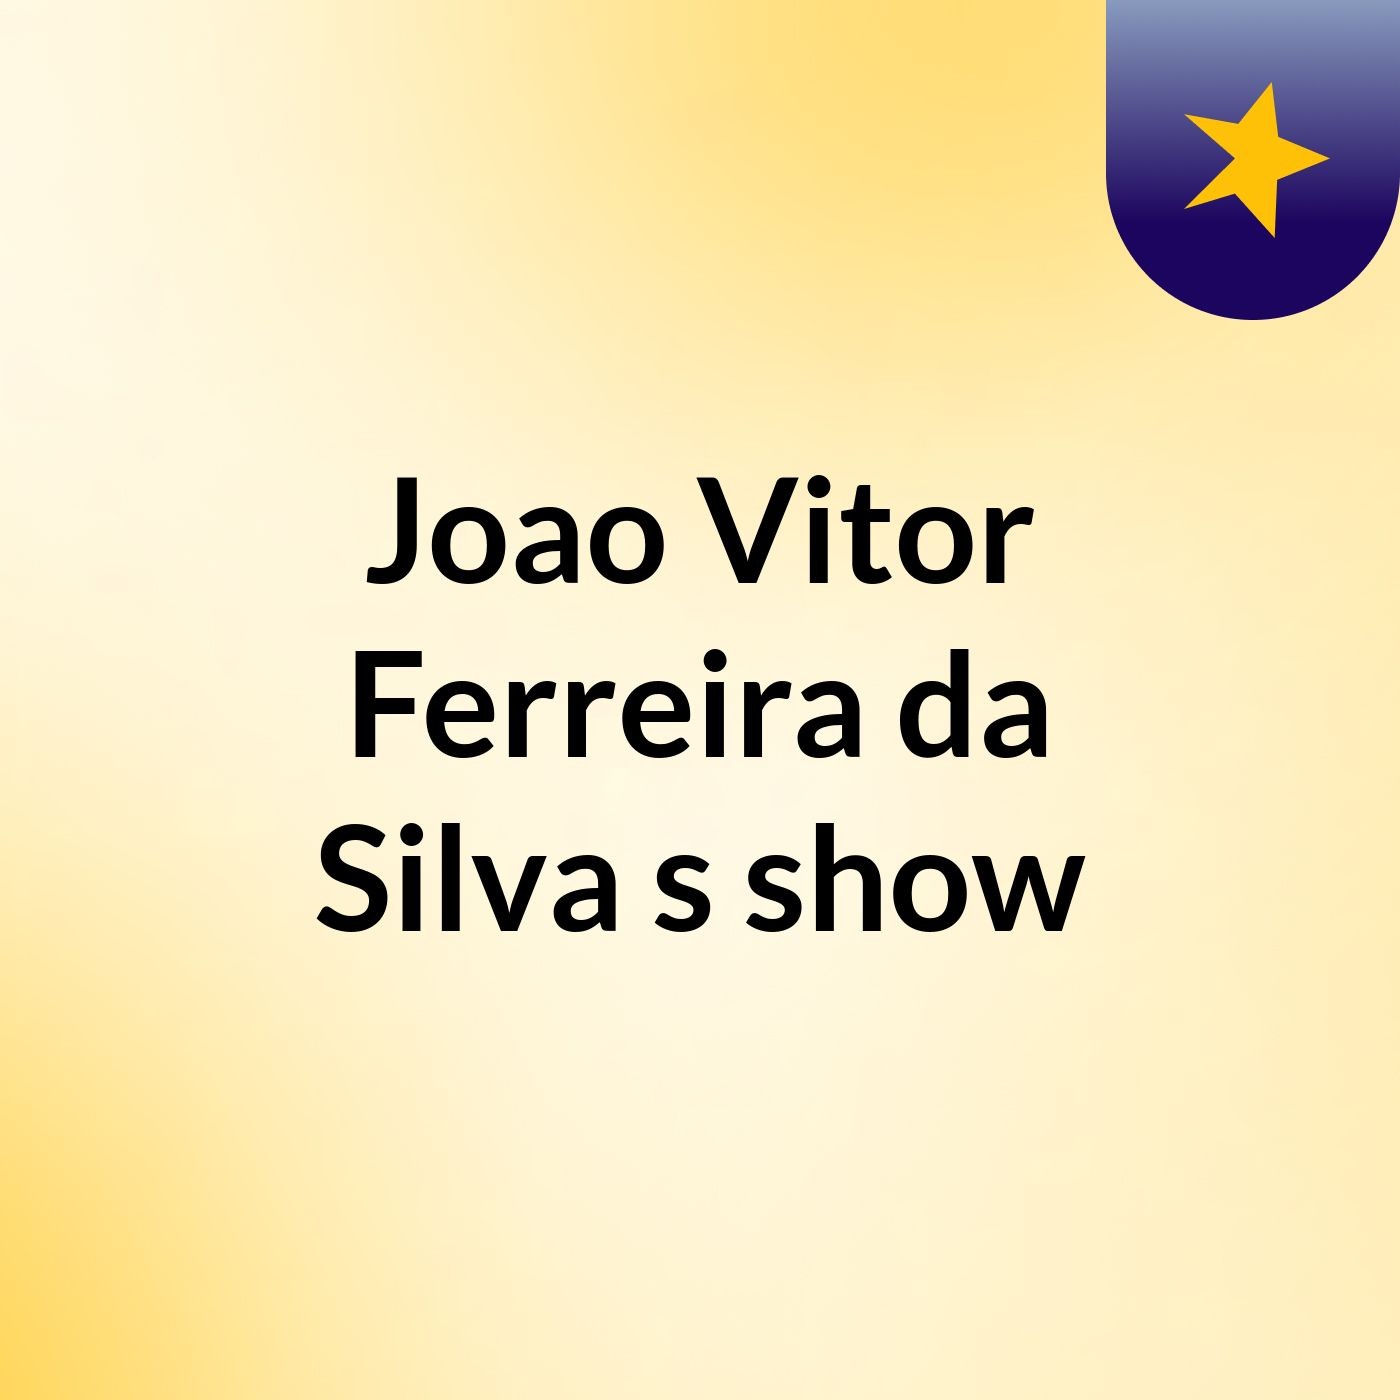 Joao Vitor Ferreira da Silva's show